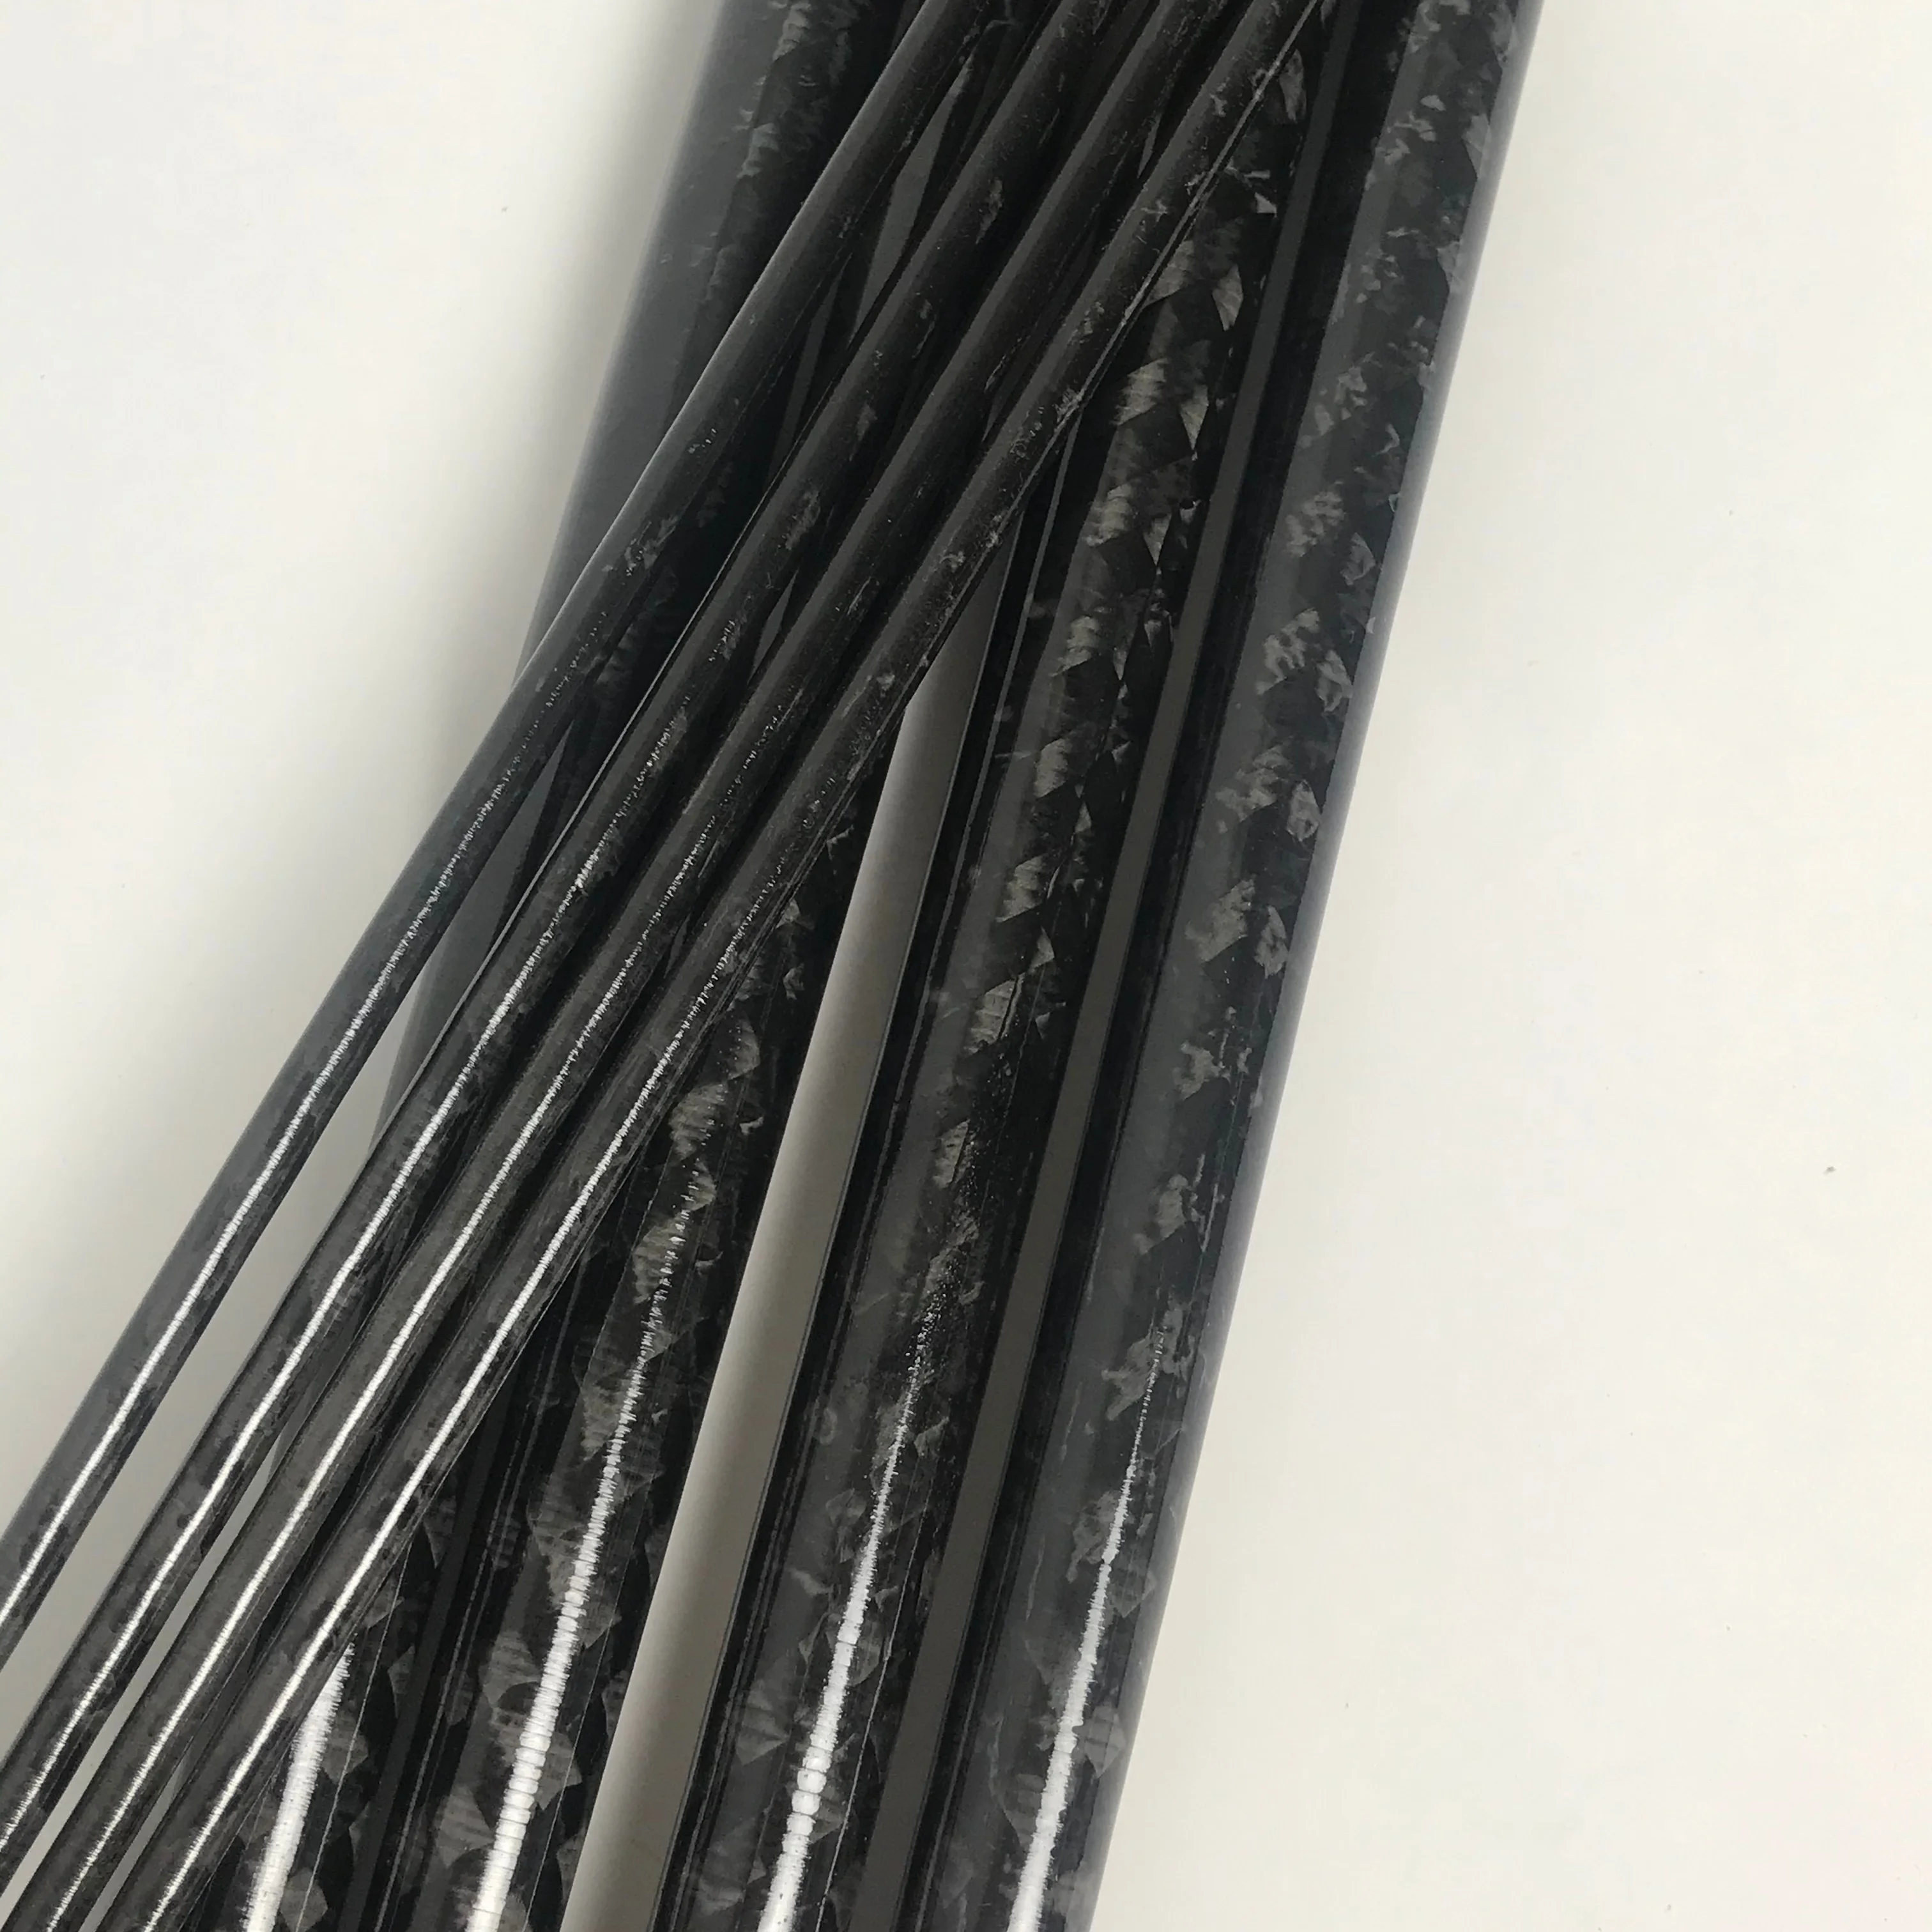 Fishing Rod Blanks Wholesale Supplier Carbon Fiber Rod